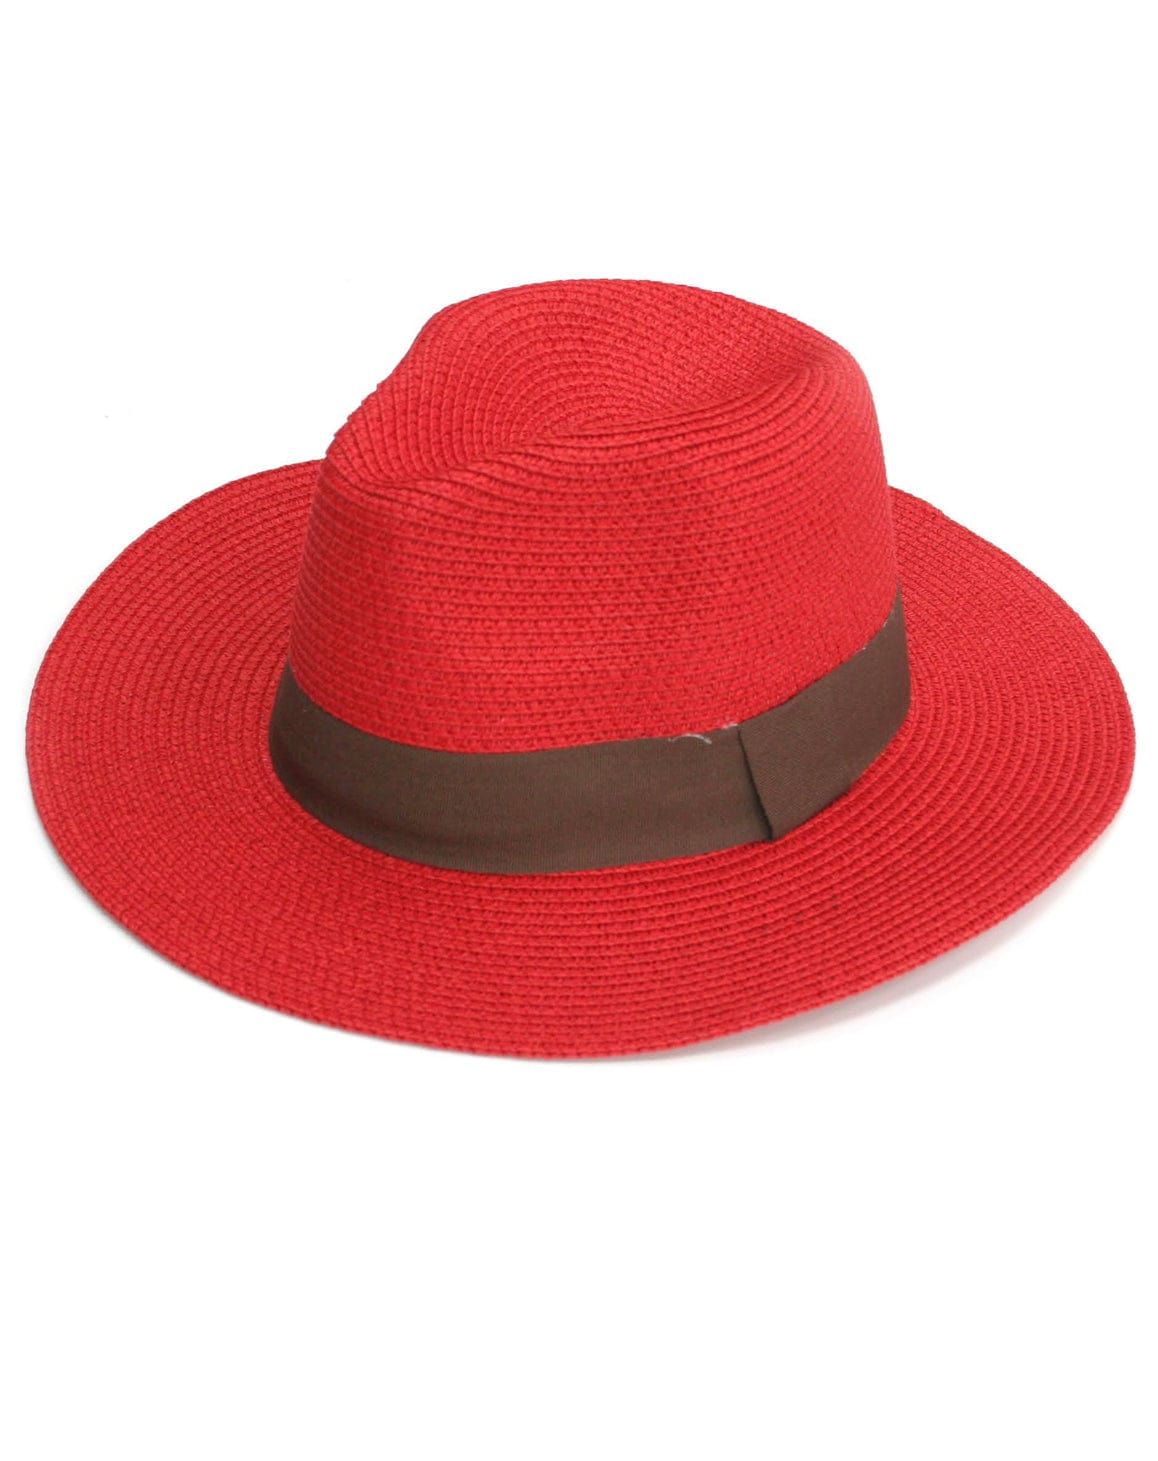 Black Ginger Red Foldable Panama Hat